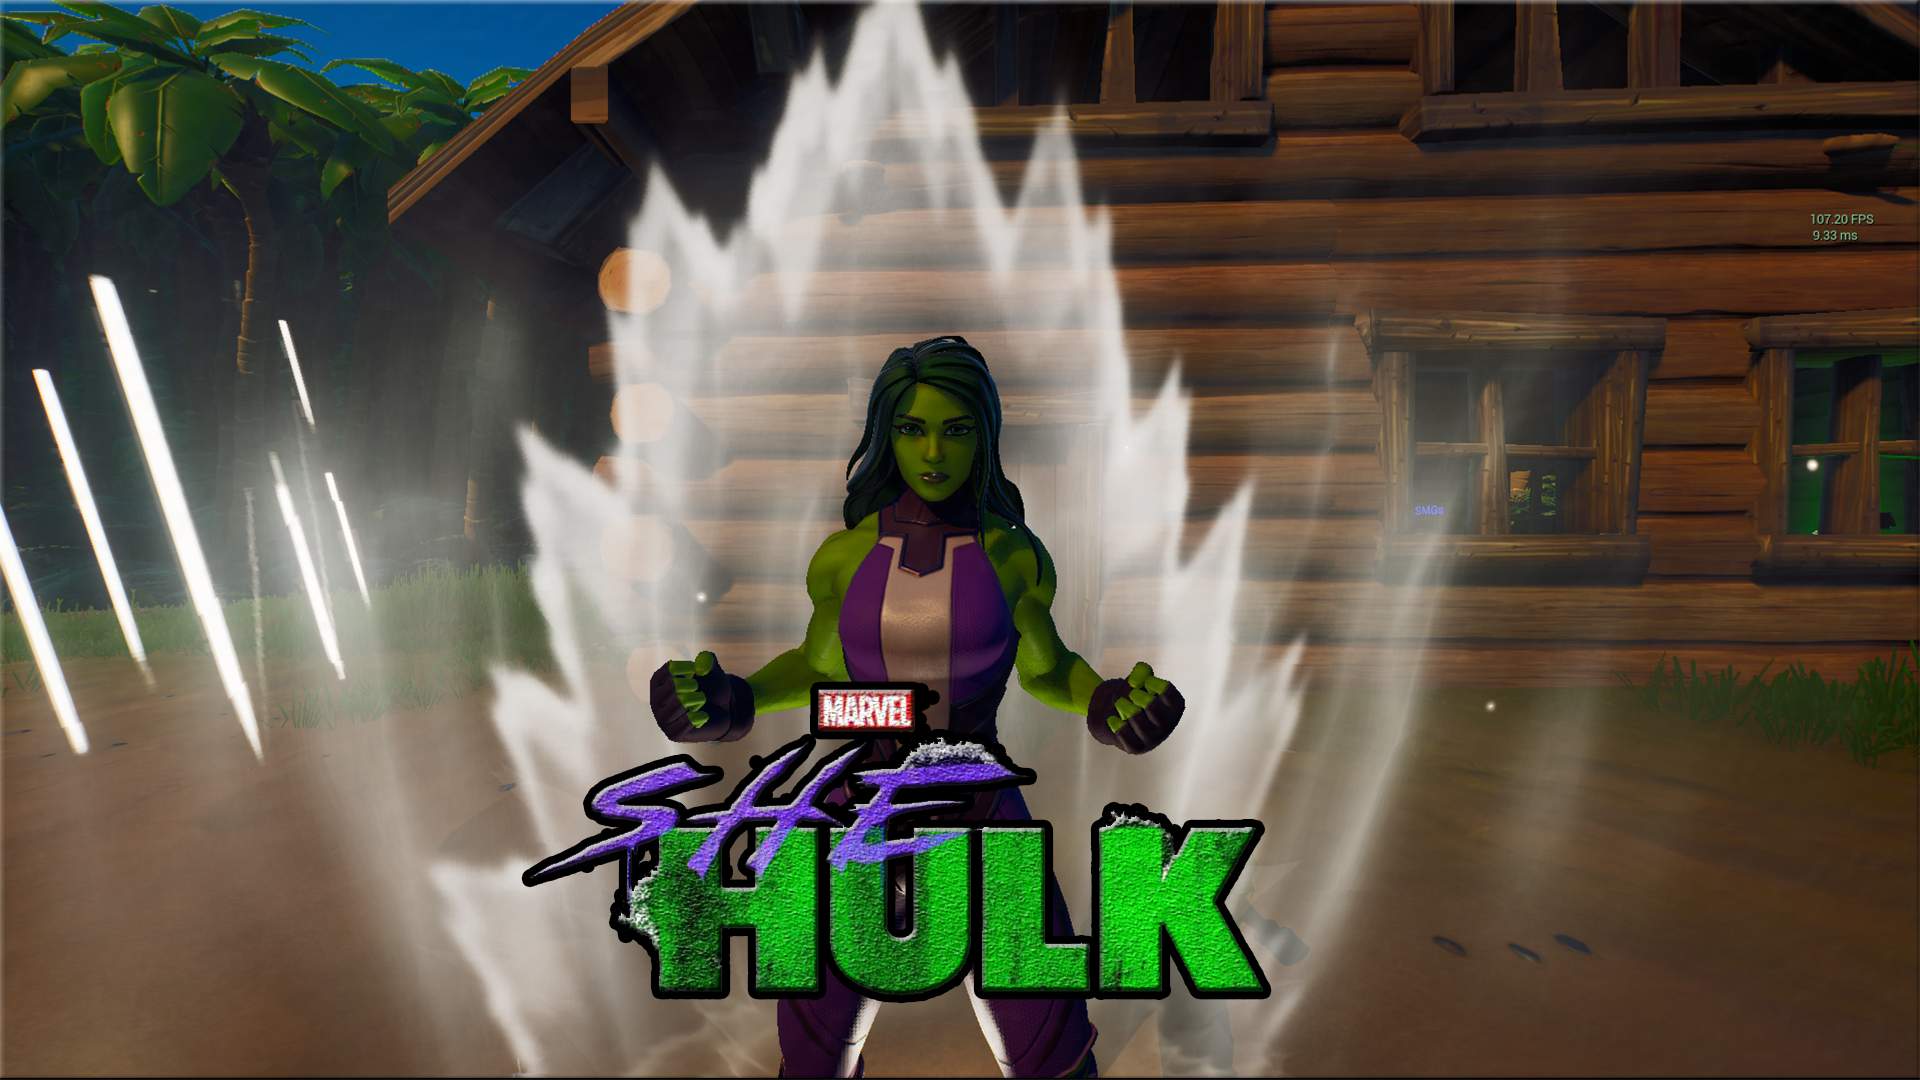 Hulk's and She hulk's beach